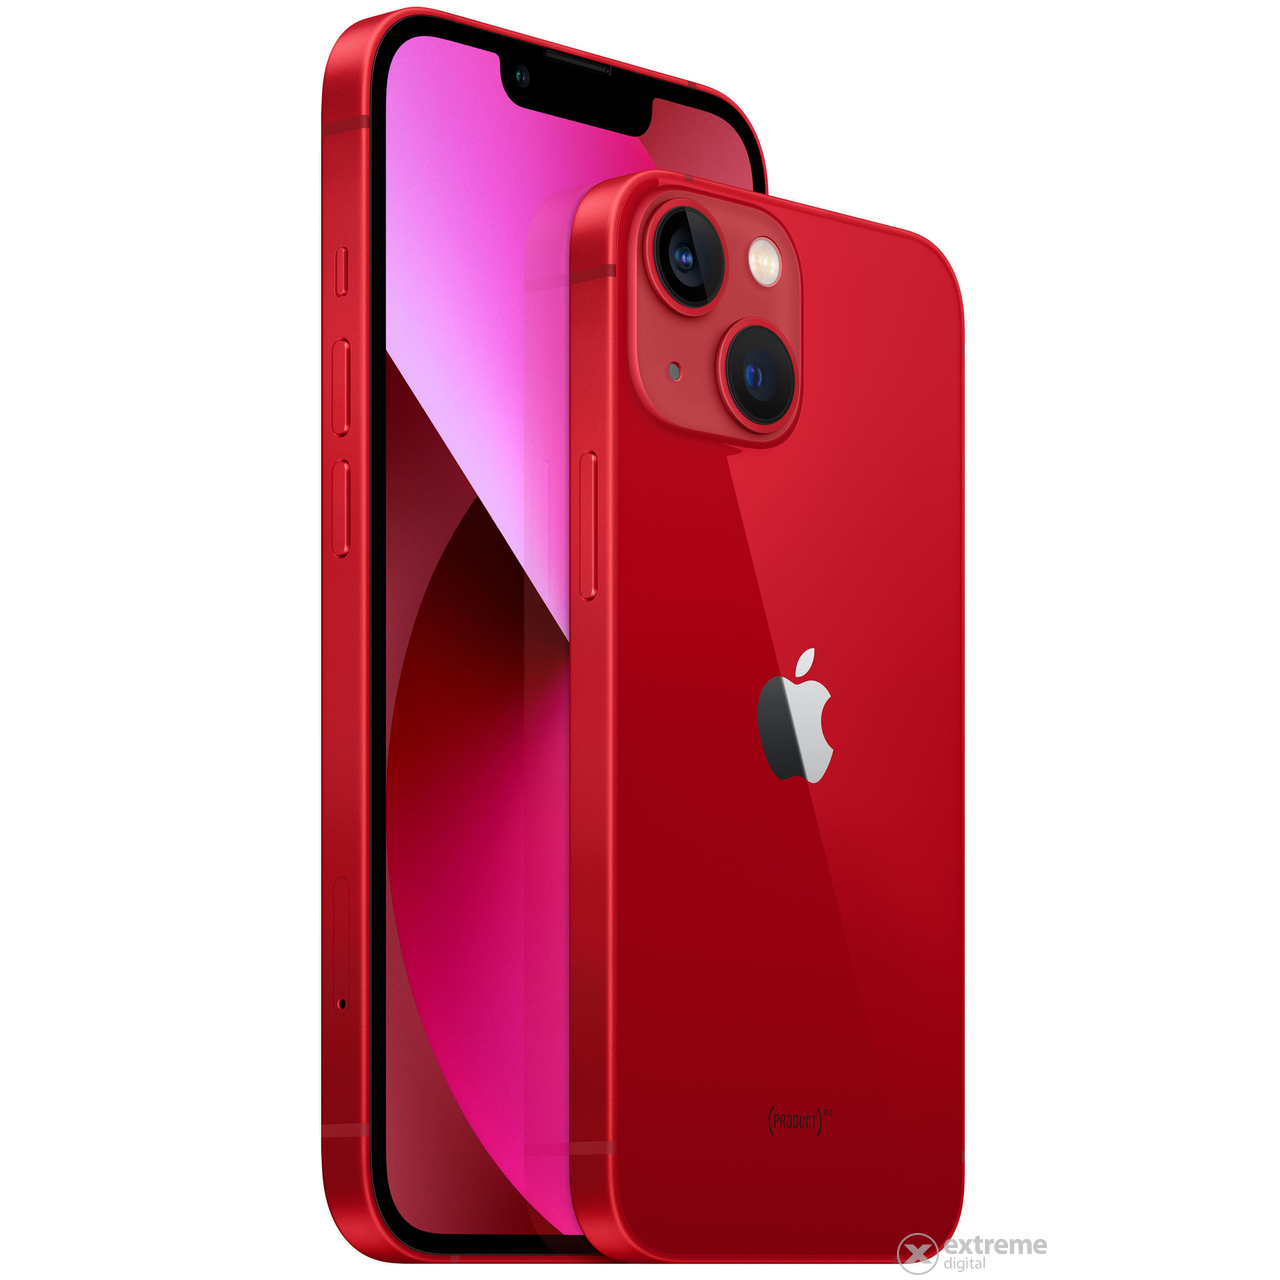 Apple iPhone 13 128GB neodvisen pametni telefon (mlpj3hu/a), (PRODUCT)RED